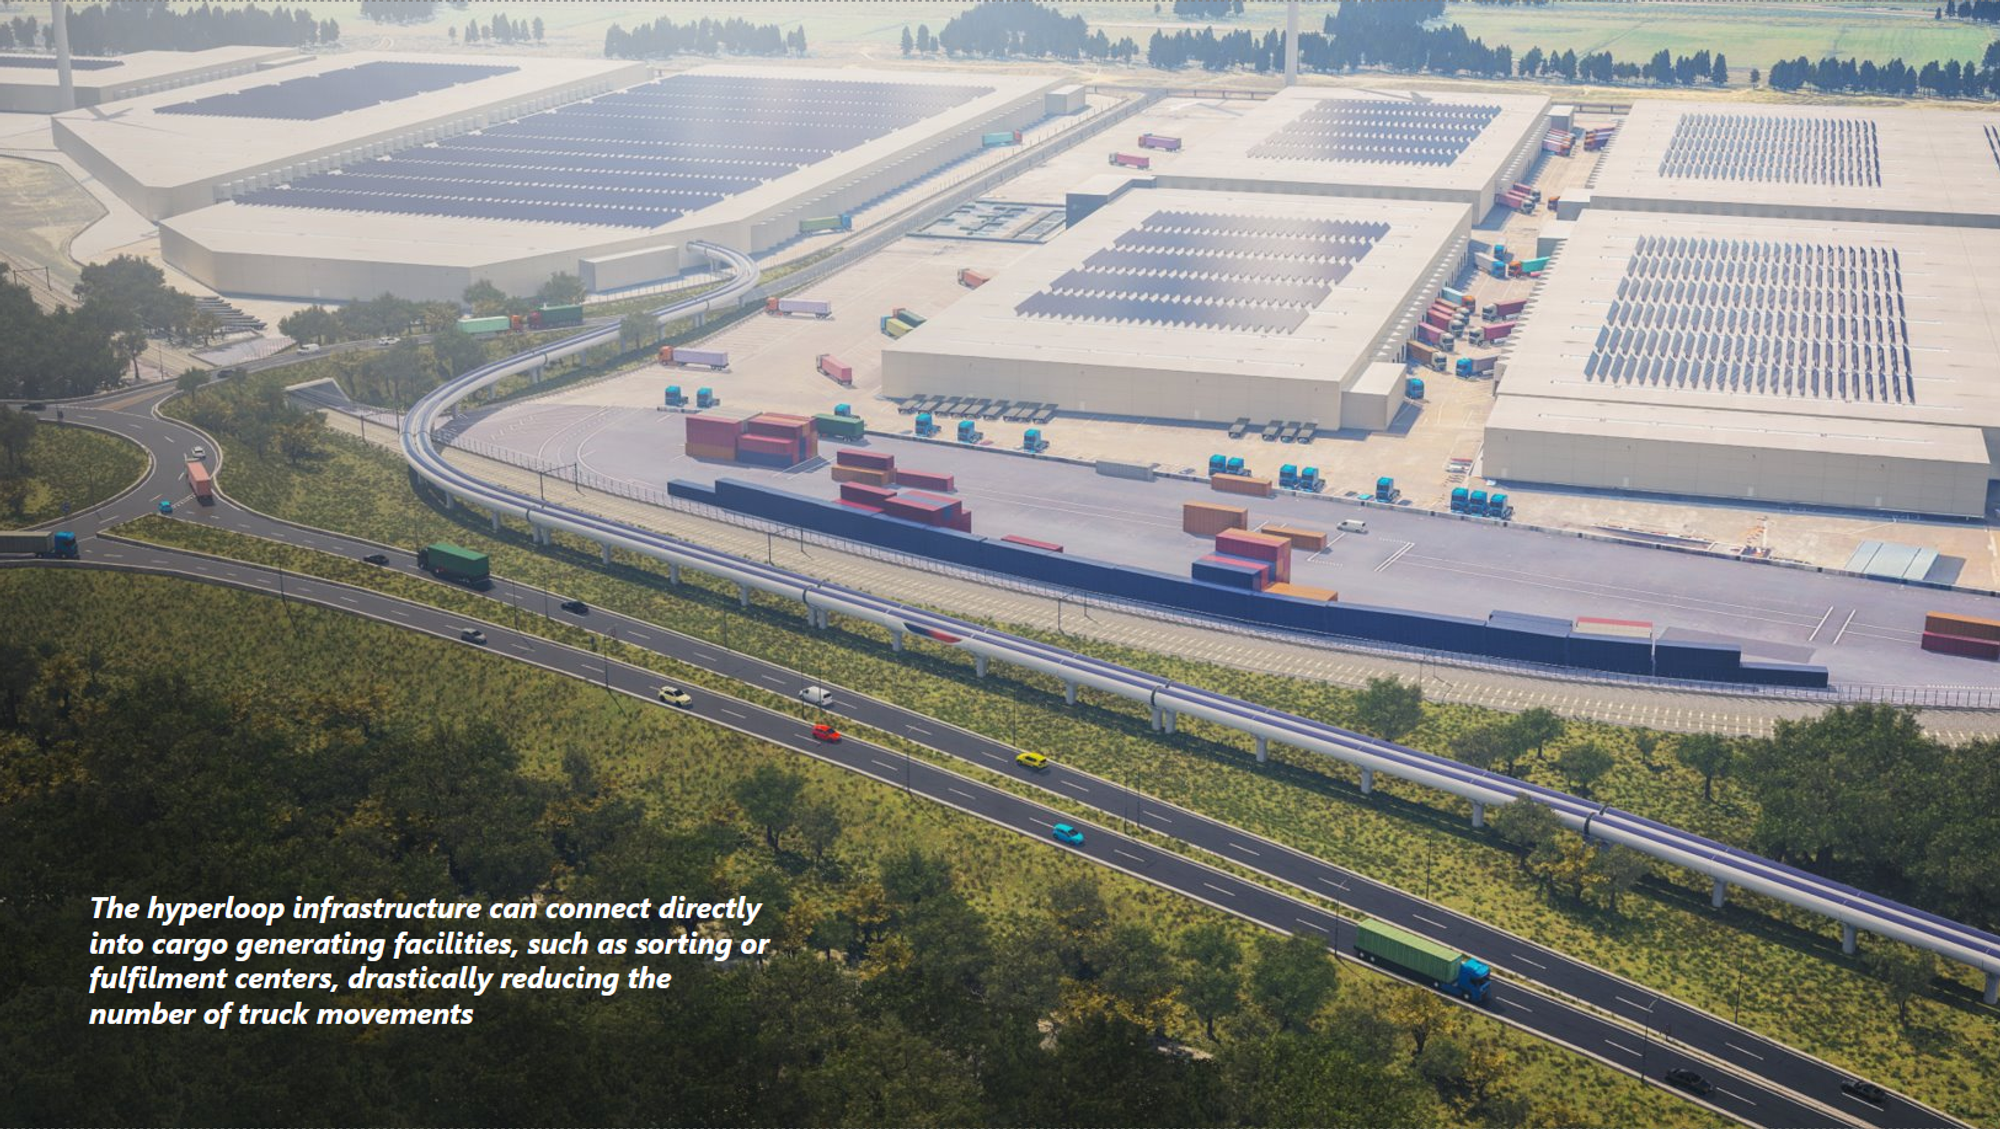 Render of cargo hyperloop within transportation industry.